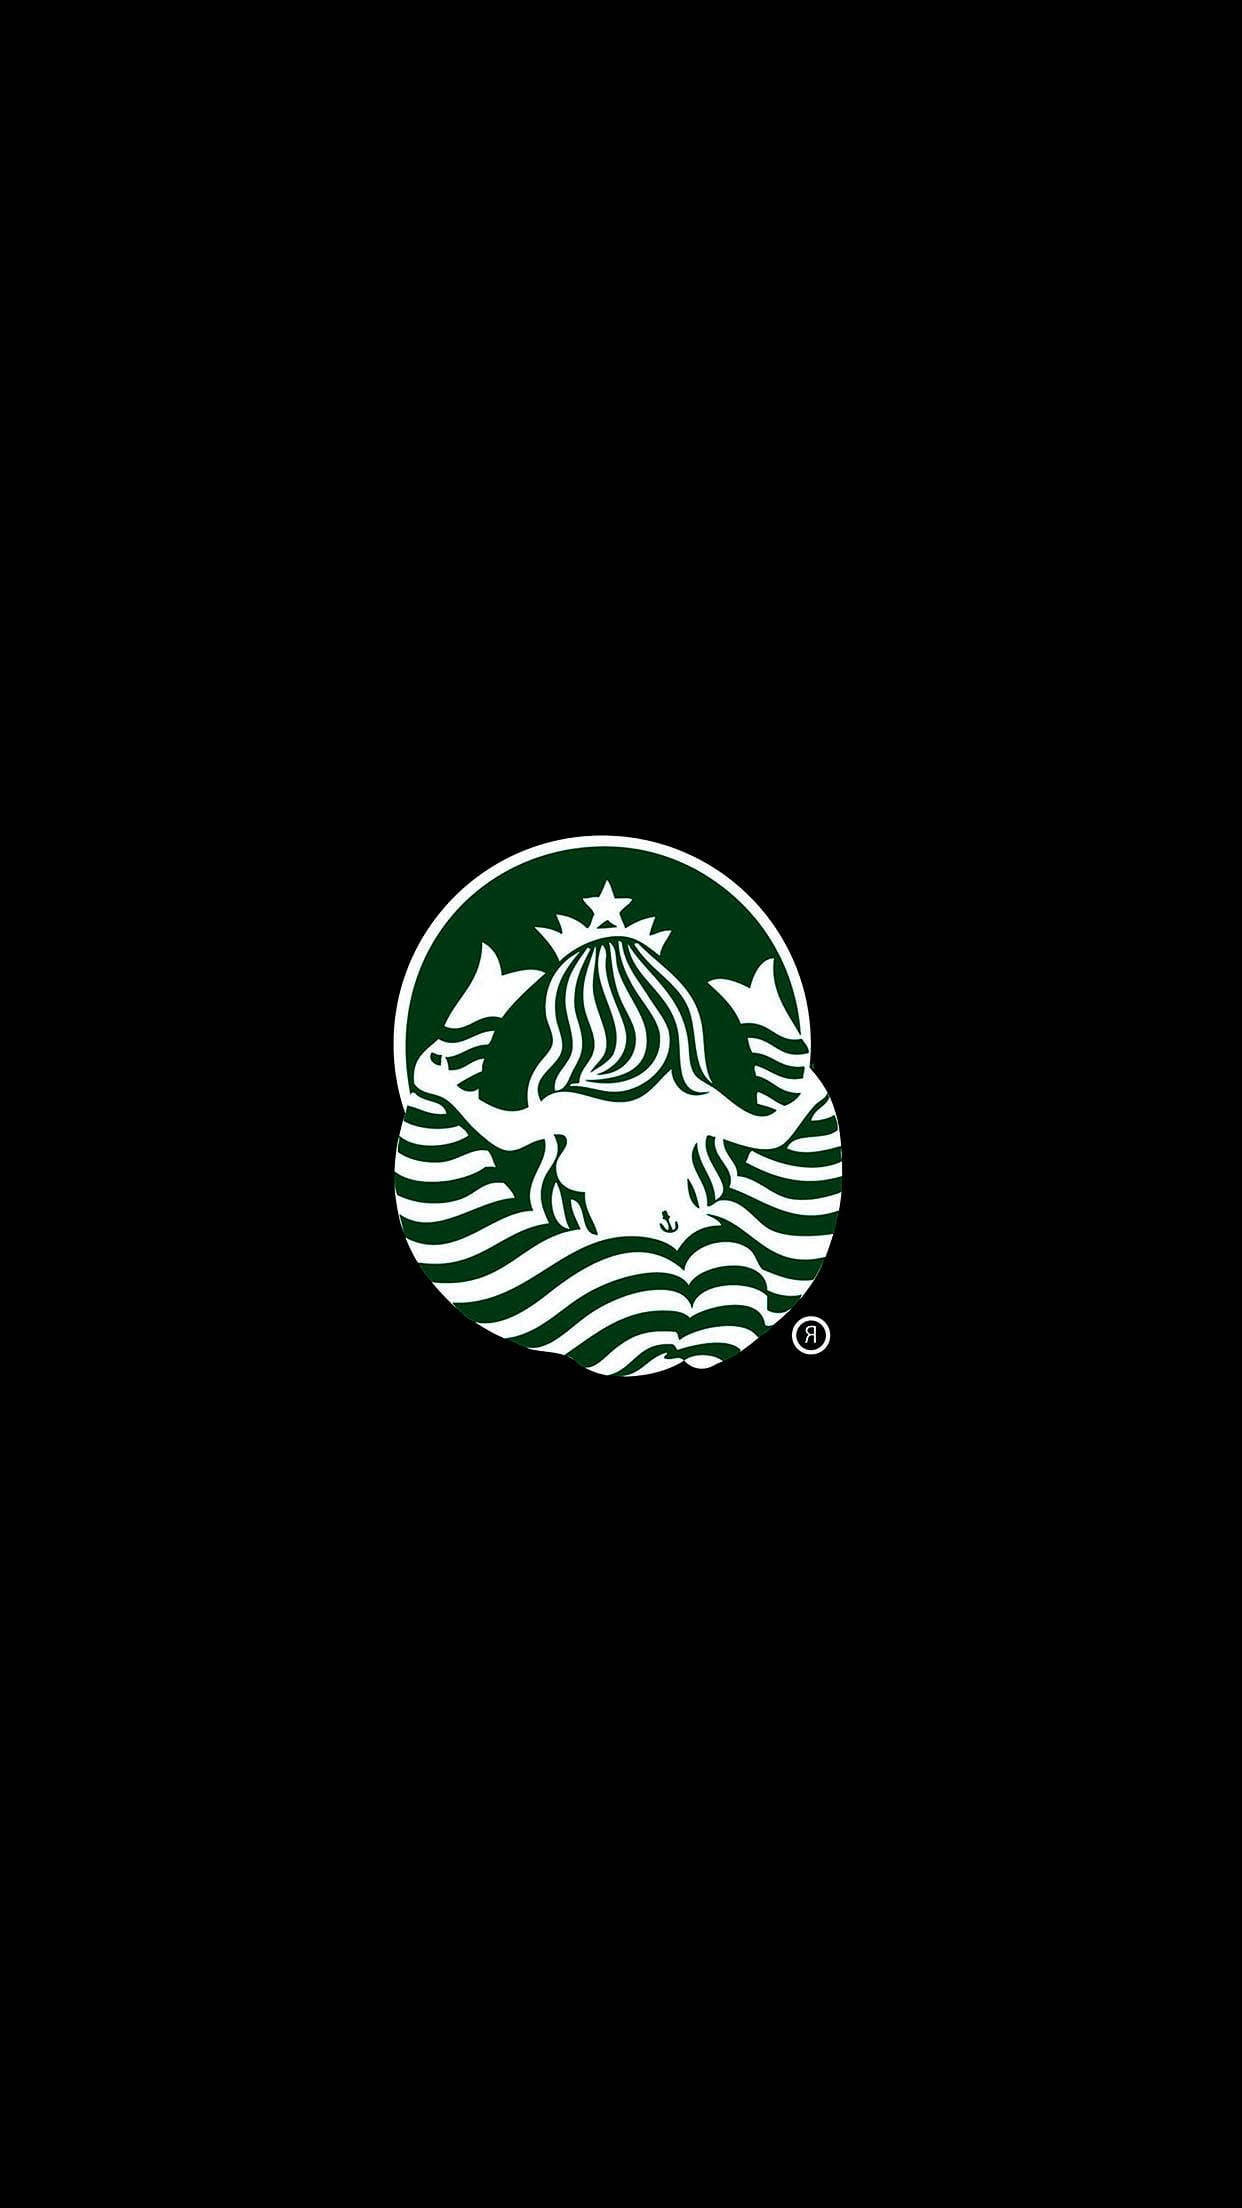 Starbucks Behind Iphone Wallpaper